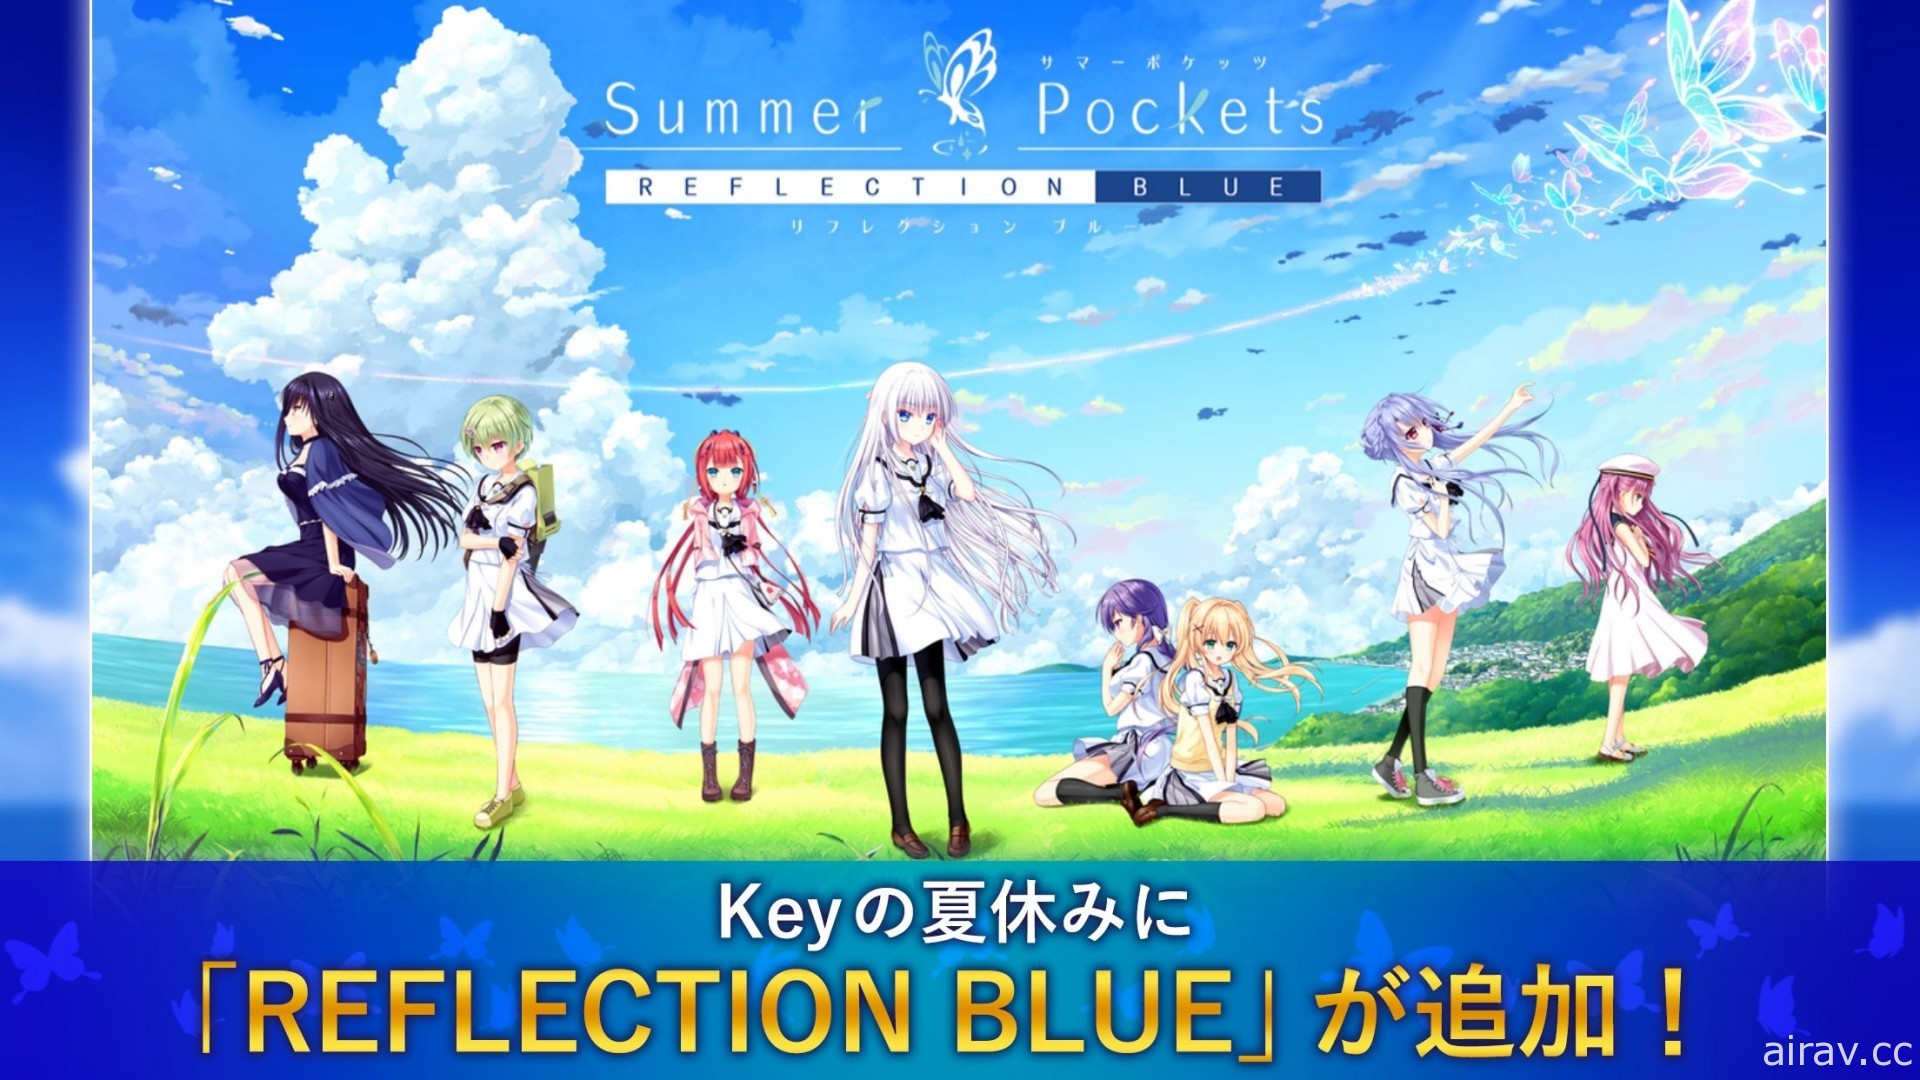 《Summer Pockets REFLECTION BLUE》于手机平台推出 追加新女主角及路线